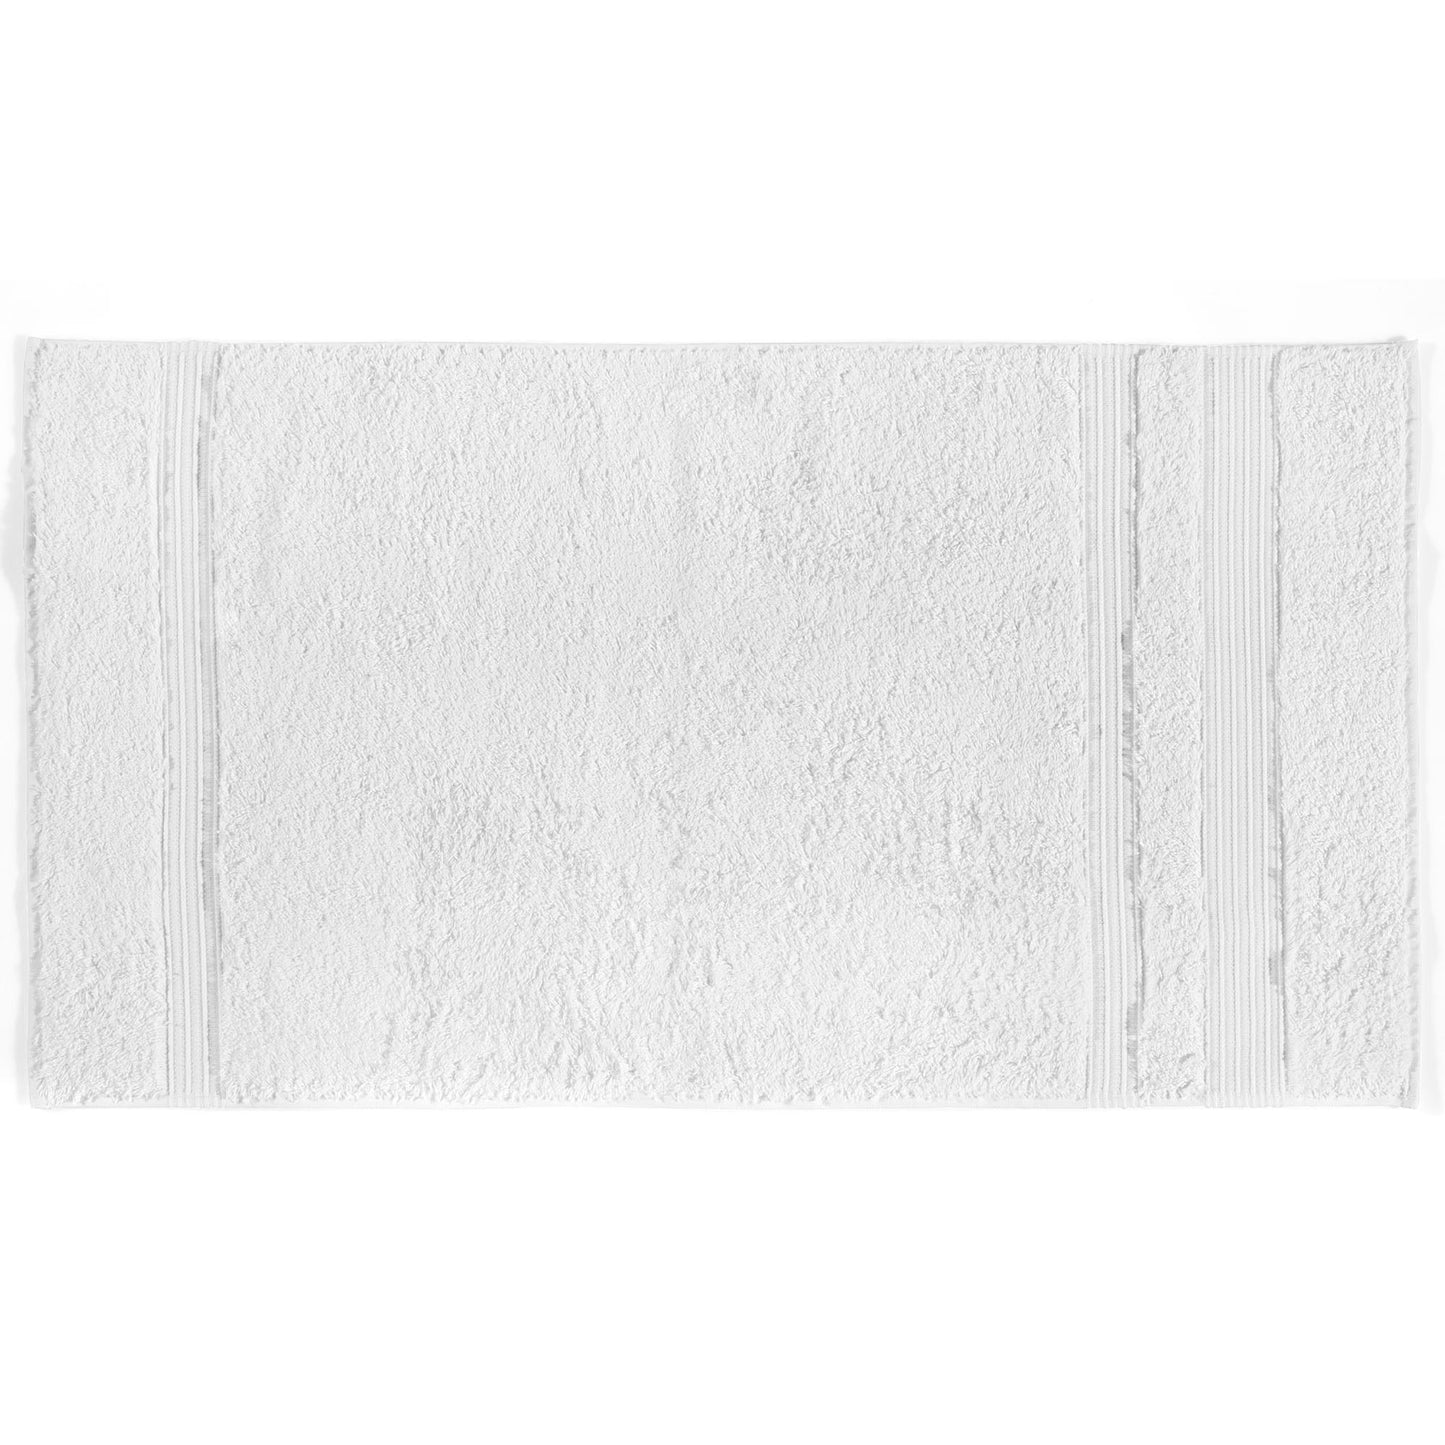 Håndklæde -  London Bath - Hvid